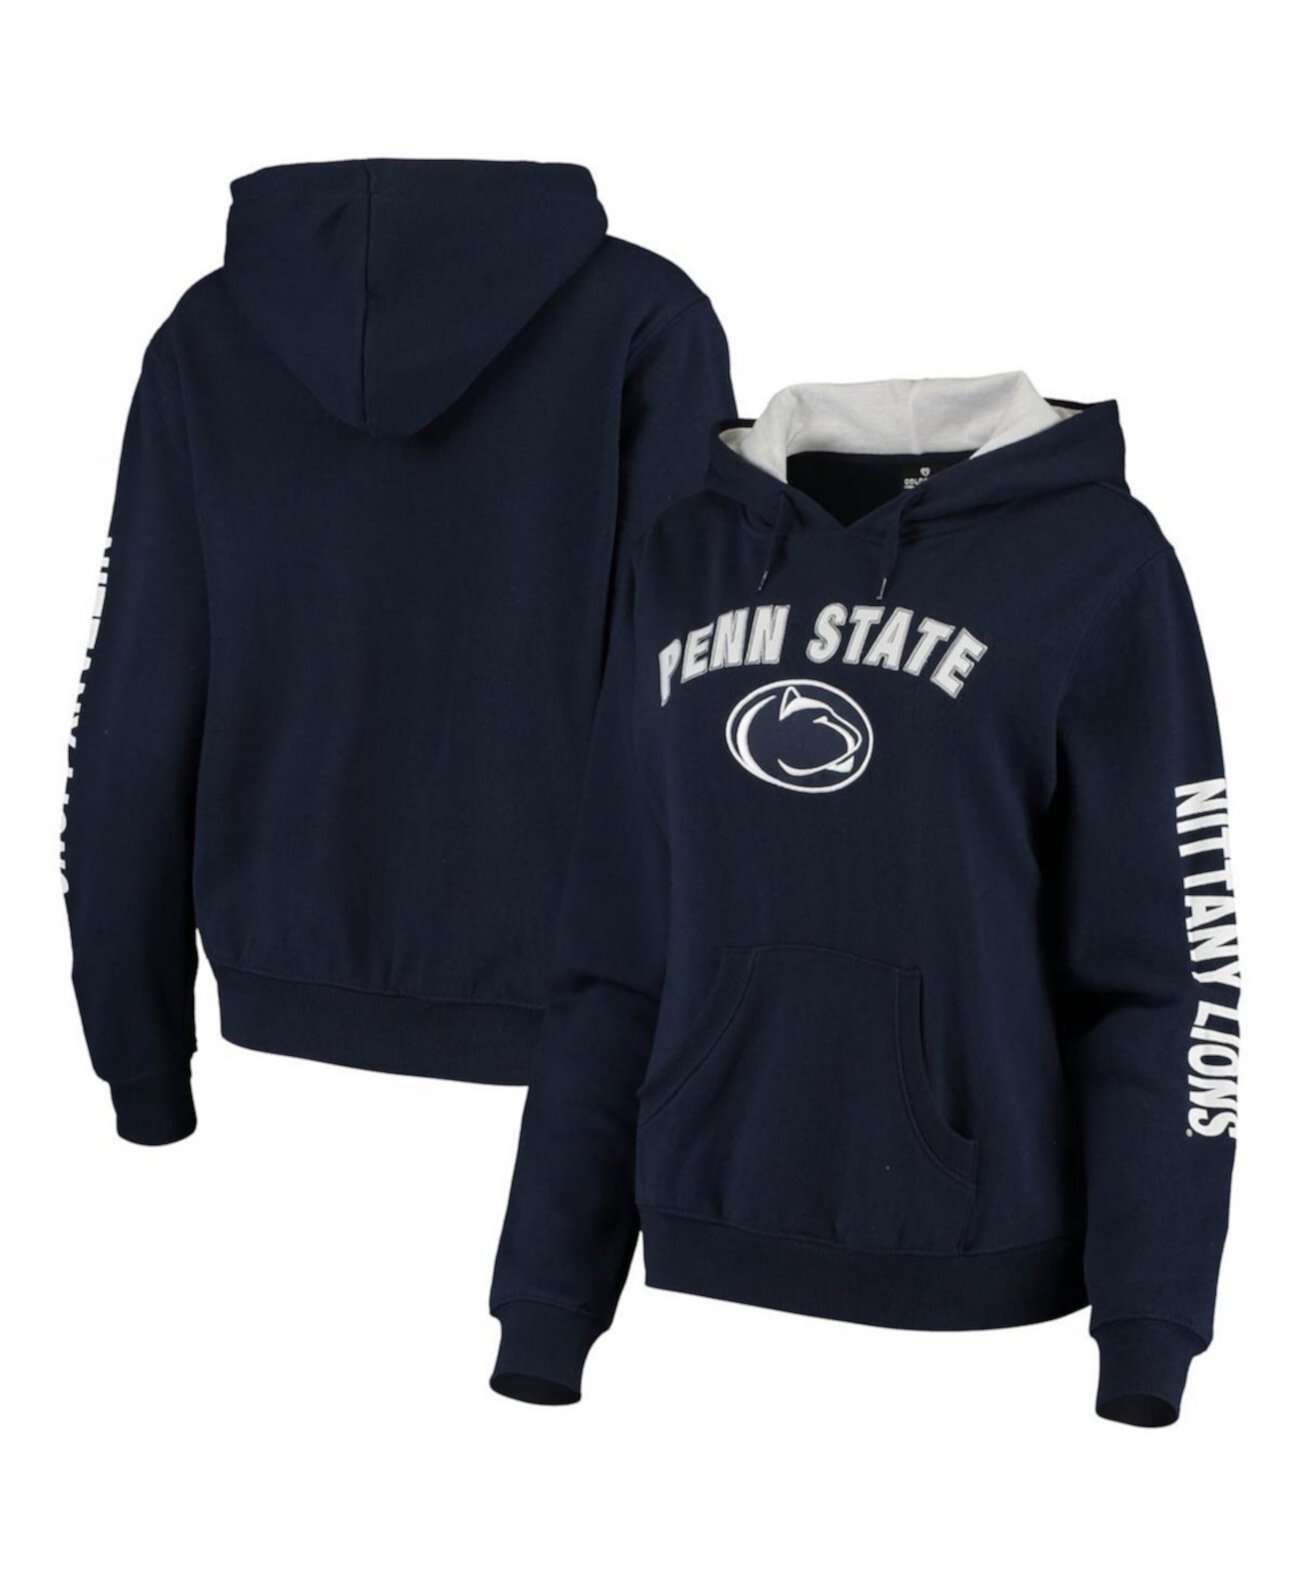 Женский пуловер с капюшоном Penn State Nittany Lions Loud and Proud темно-синего цвета Colosseum